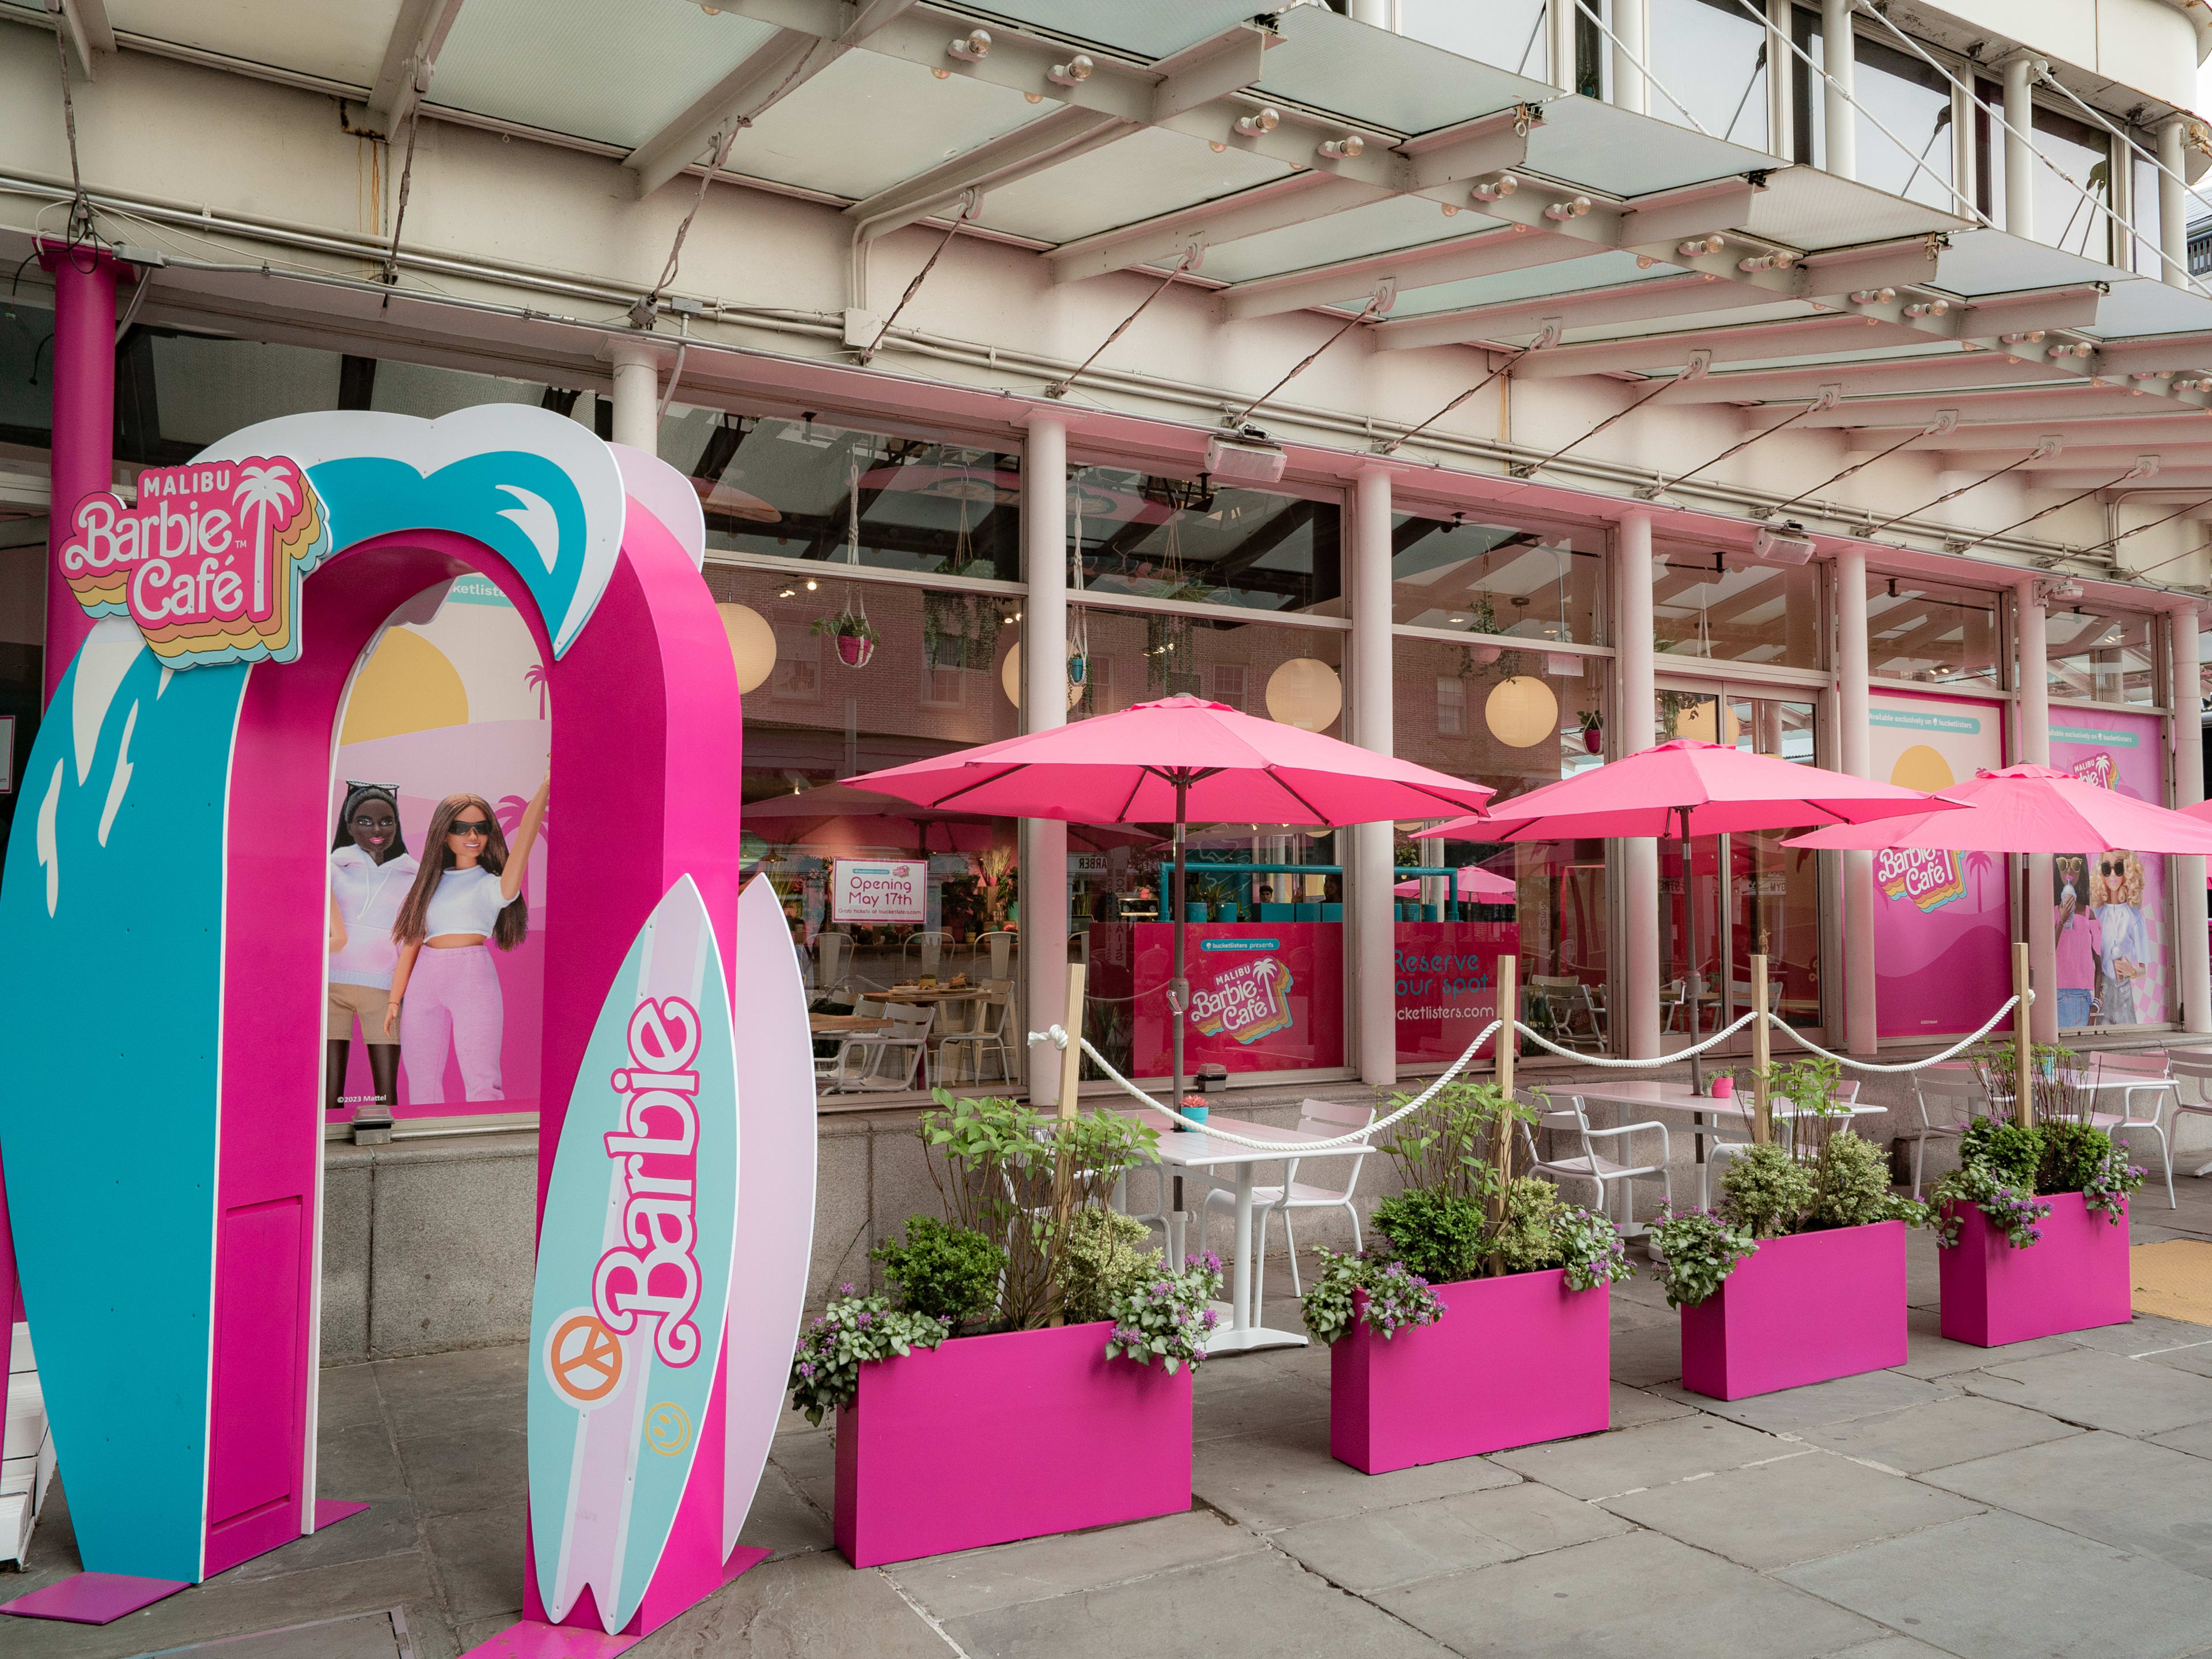 Malibu Barbie Cafe Review - South Street Seaport - New York - The ...